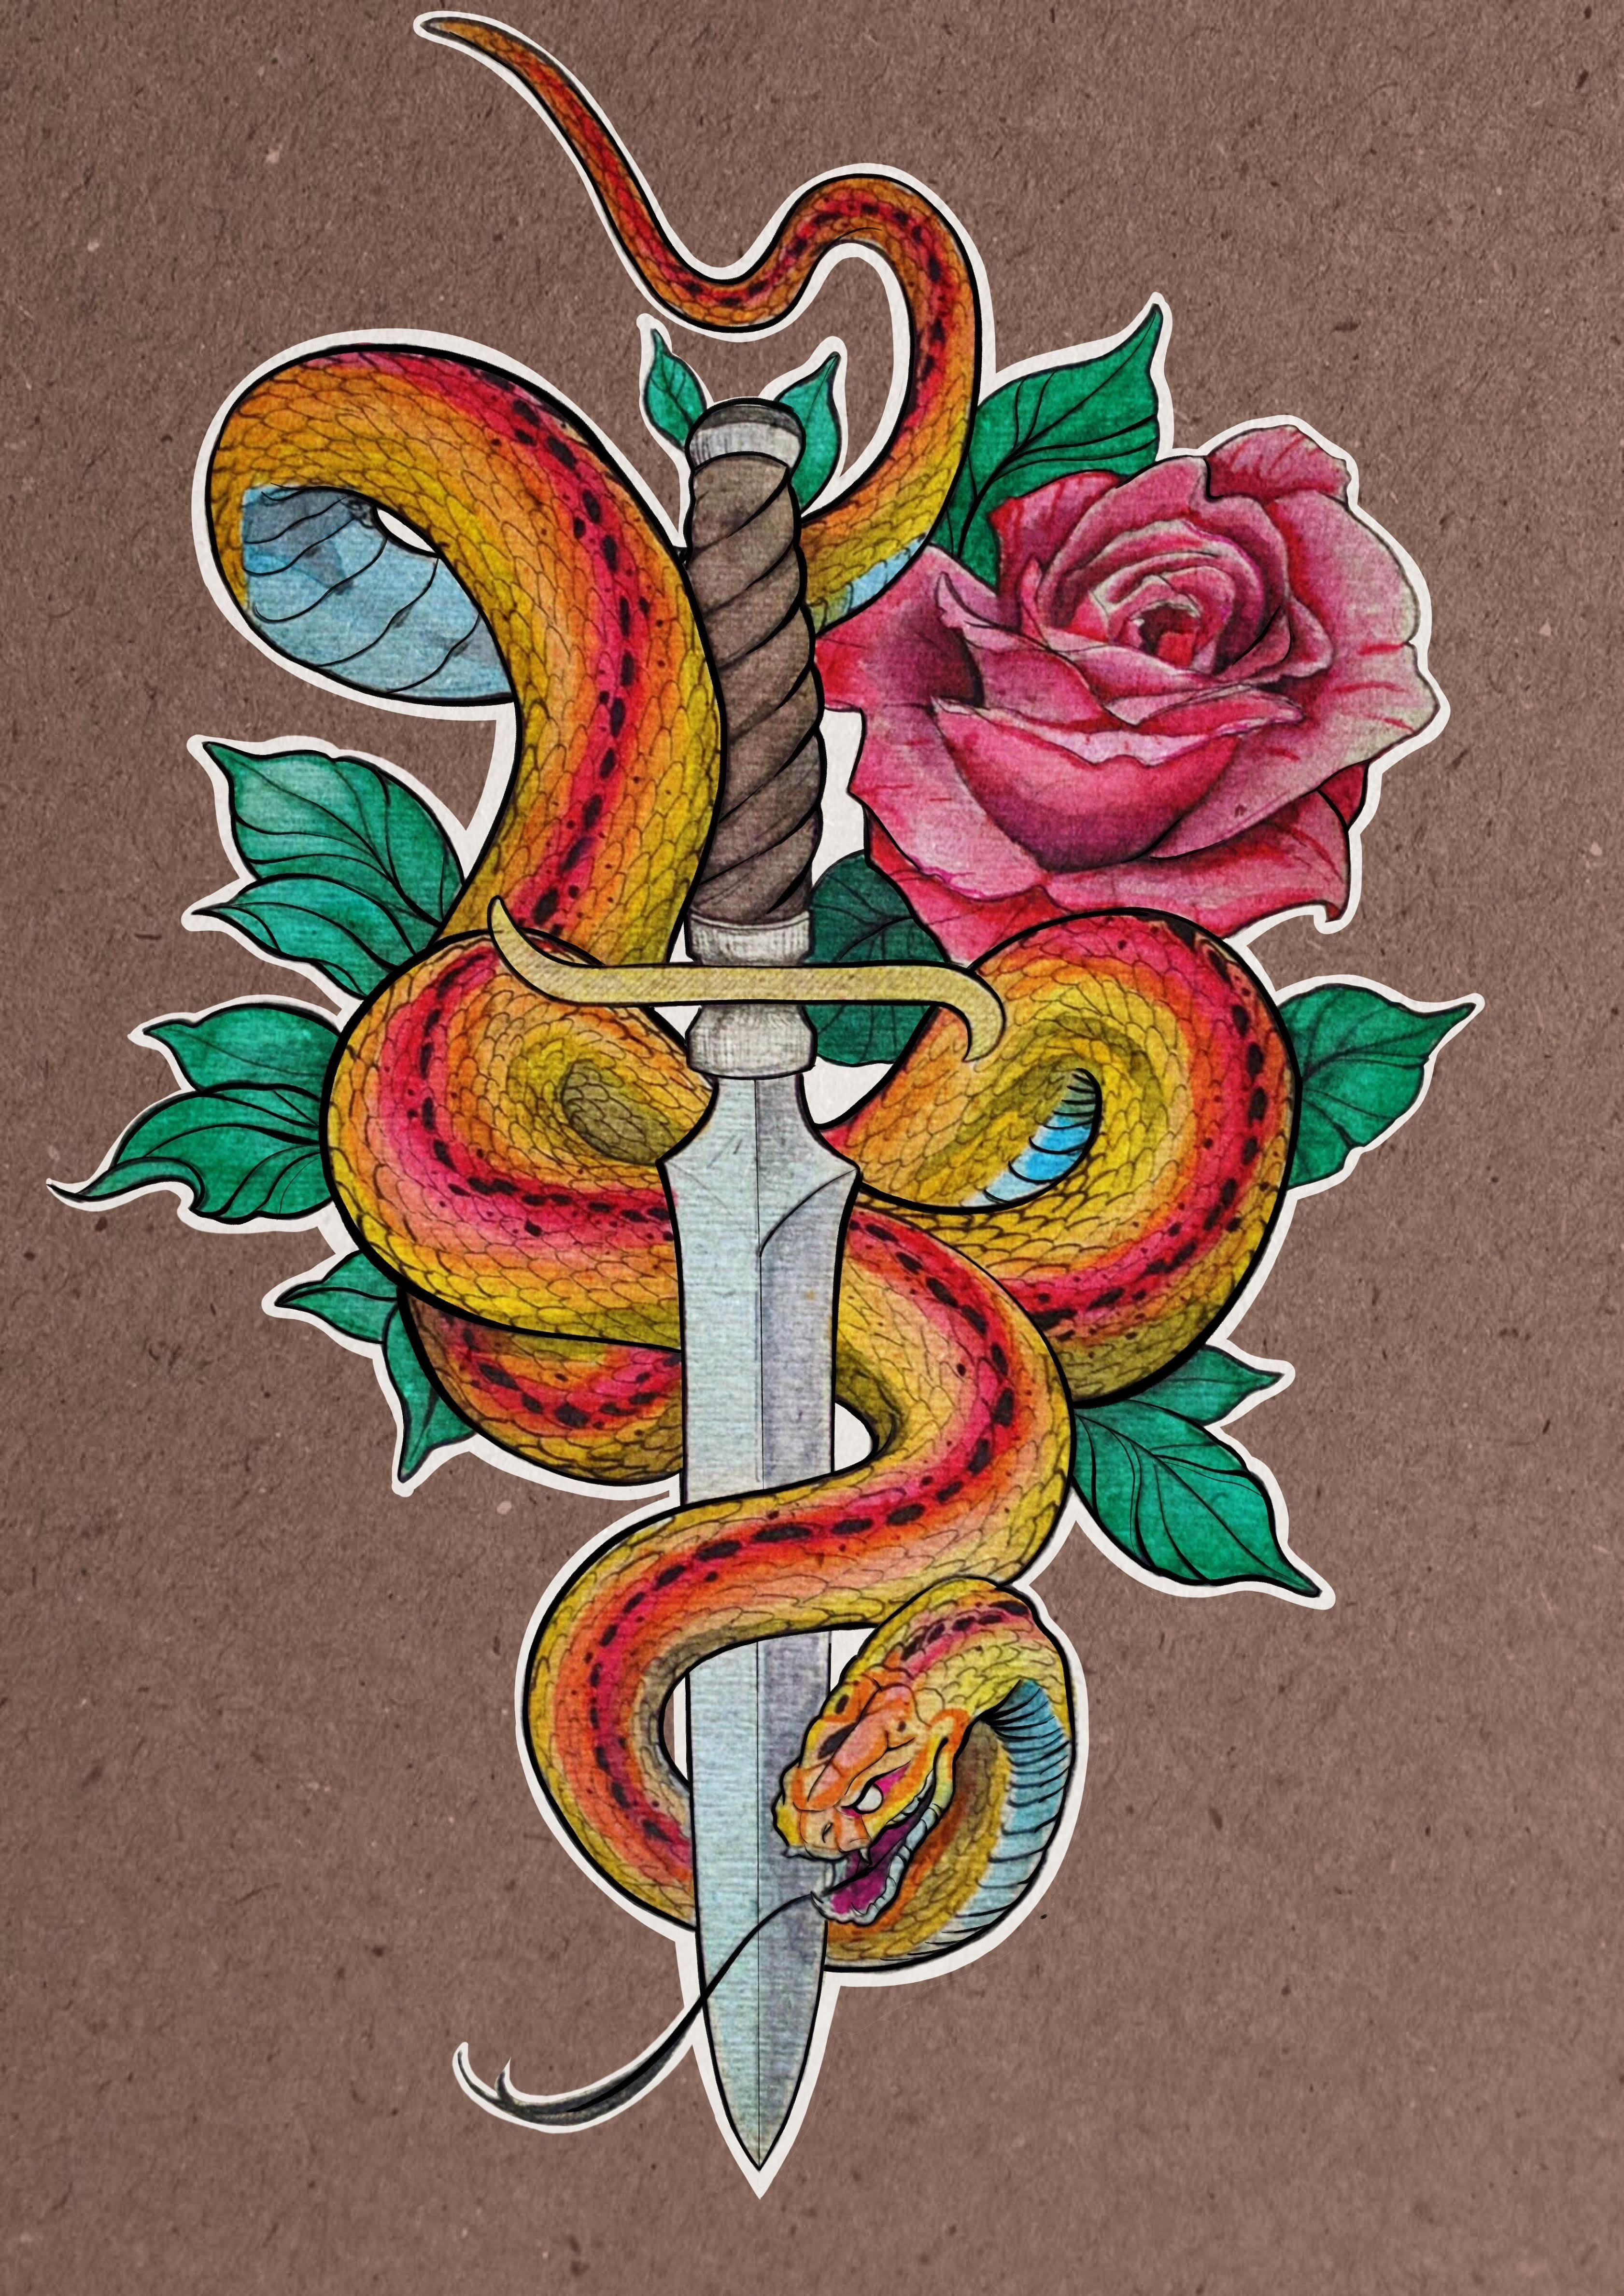 flash tattoo néo-traditional dagger snake roses lyon corbas poignard serpent